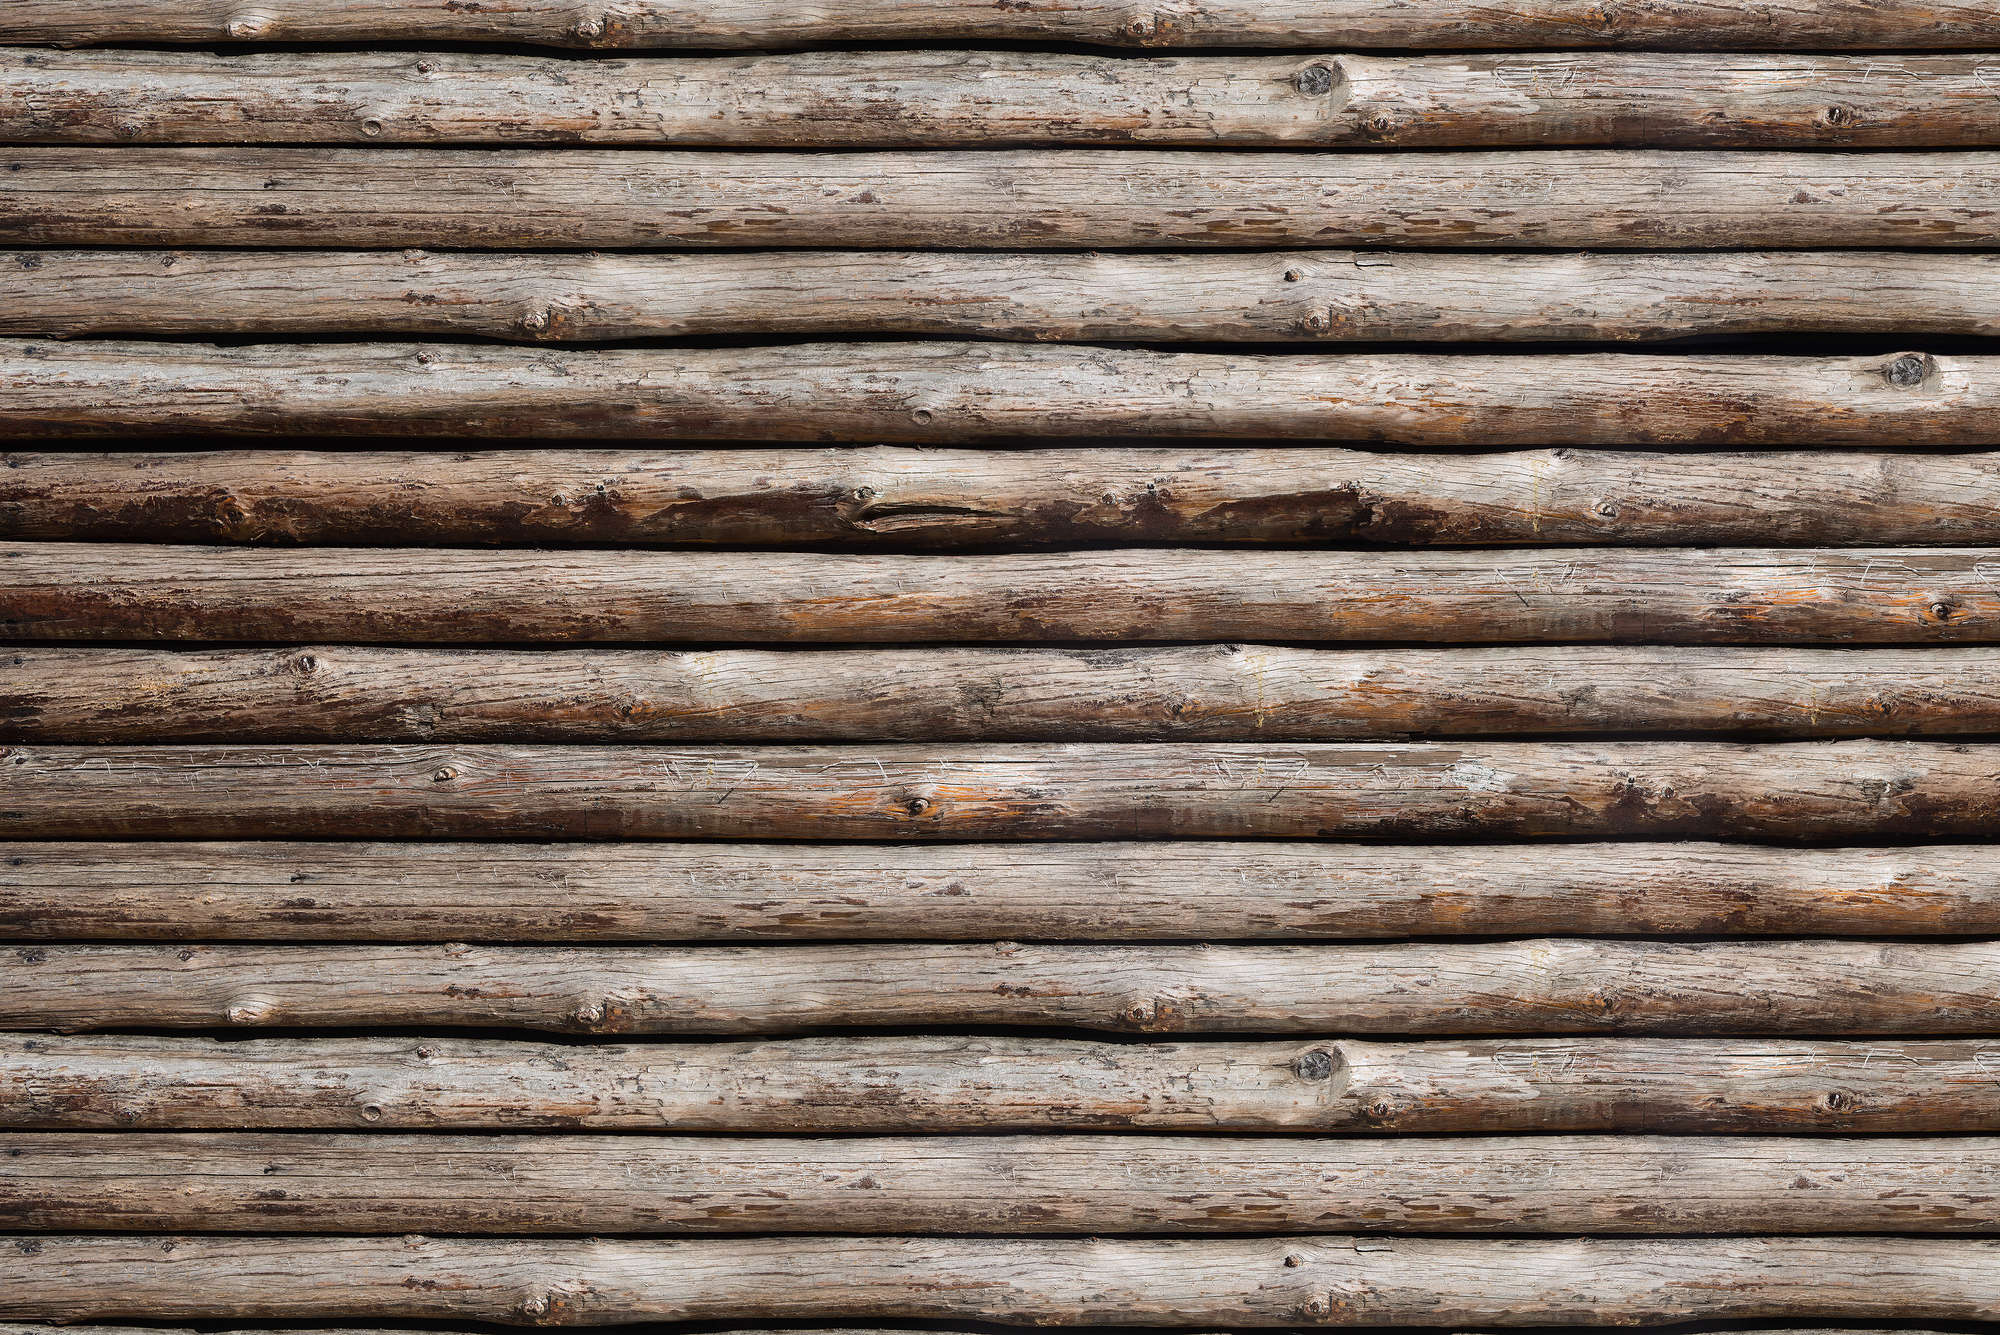             Holz Fototapete Blockhütten Wand auf Premium Glattvlies
        